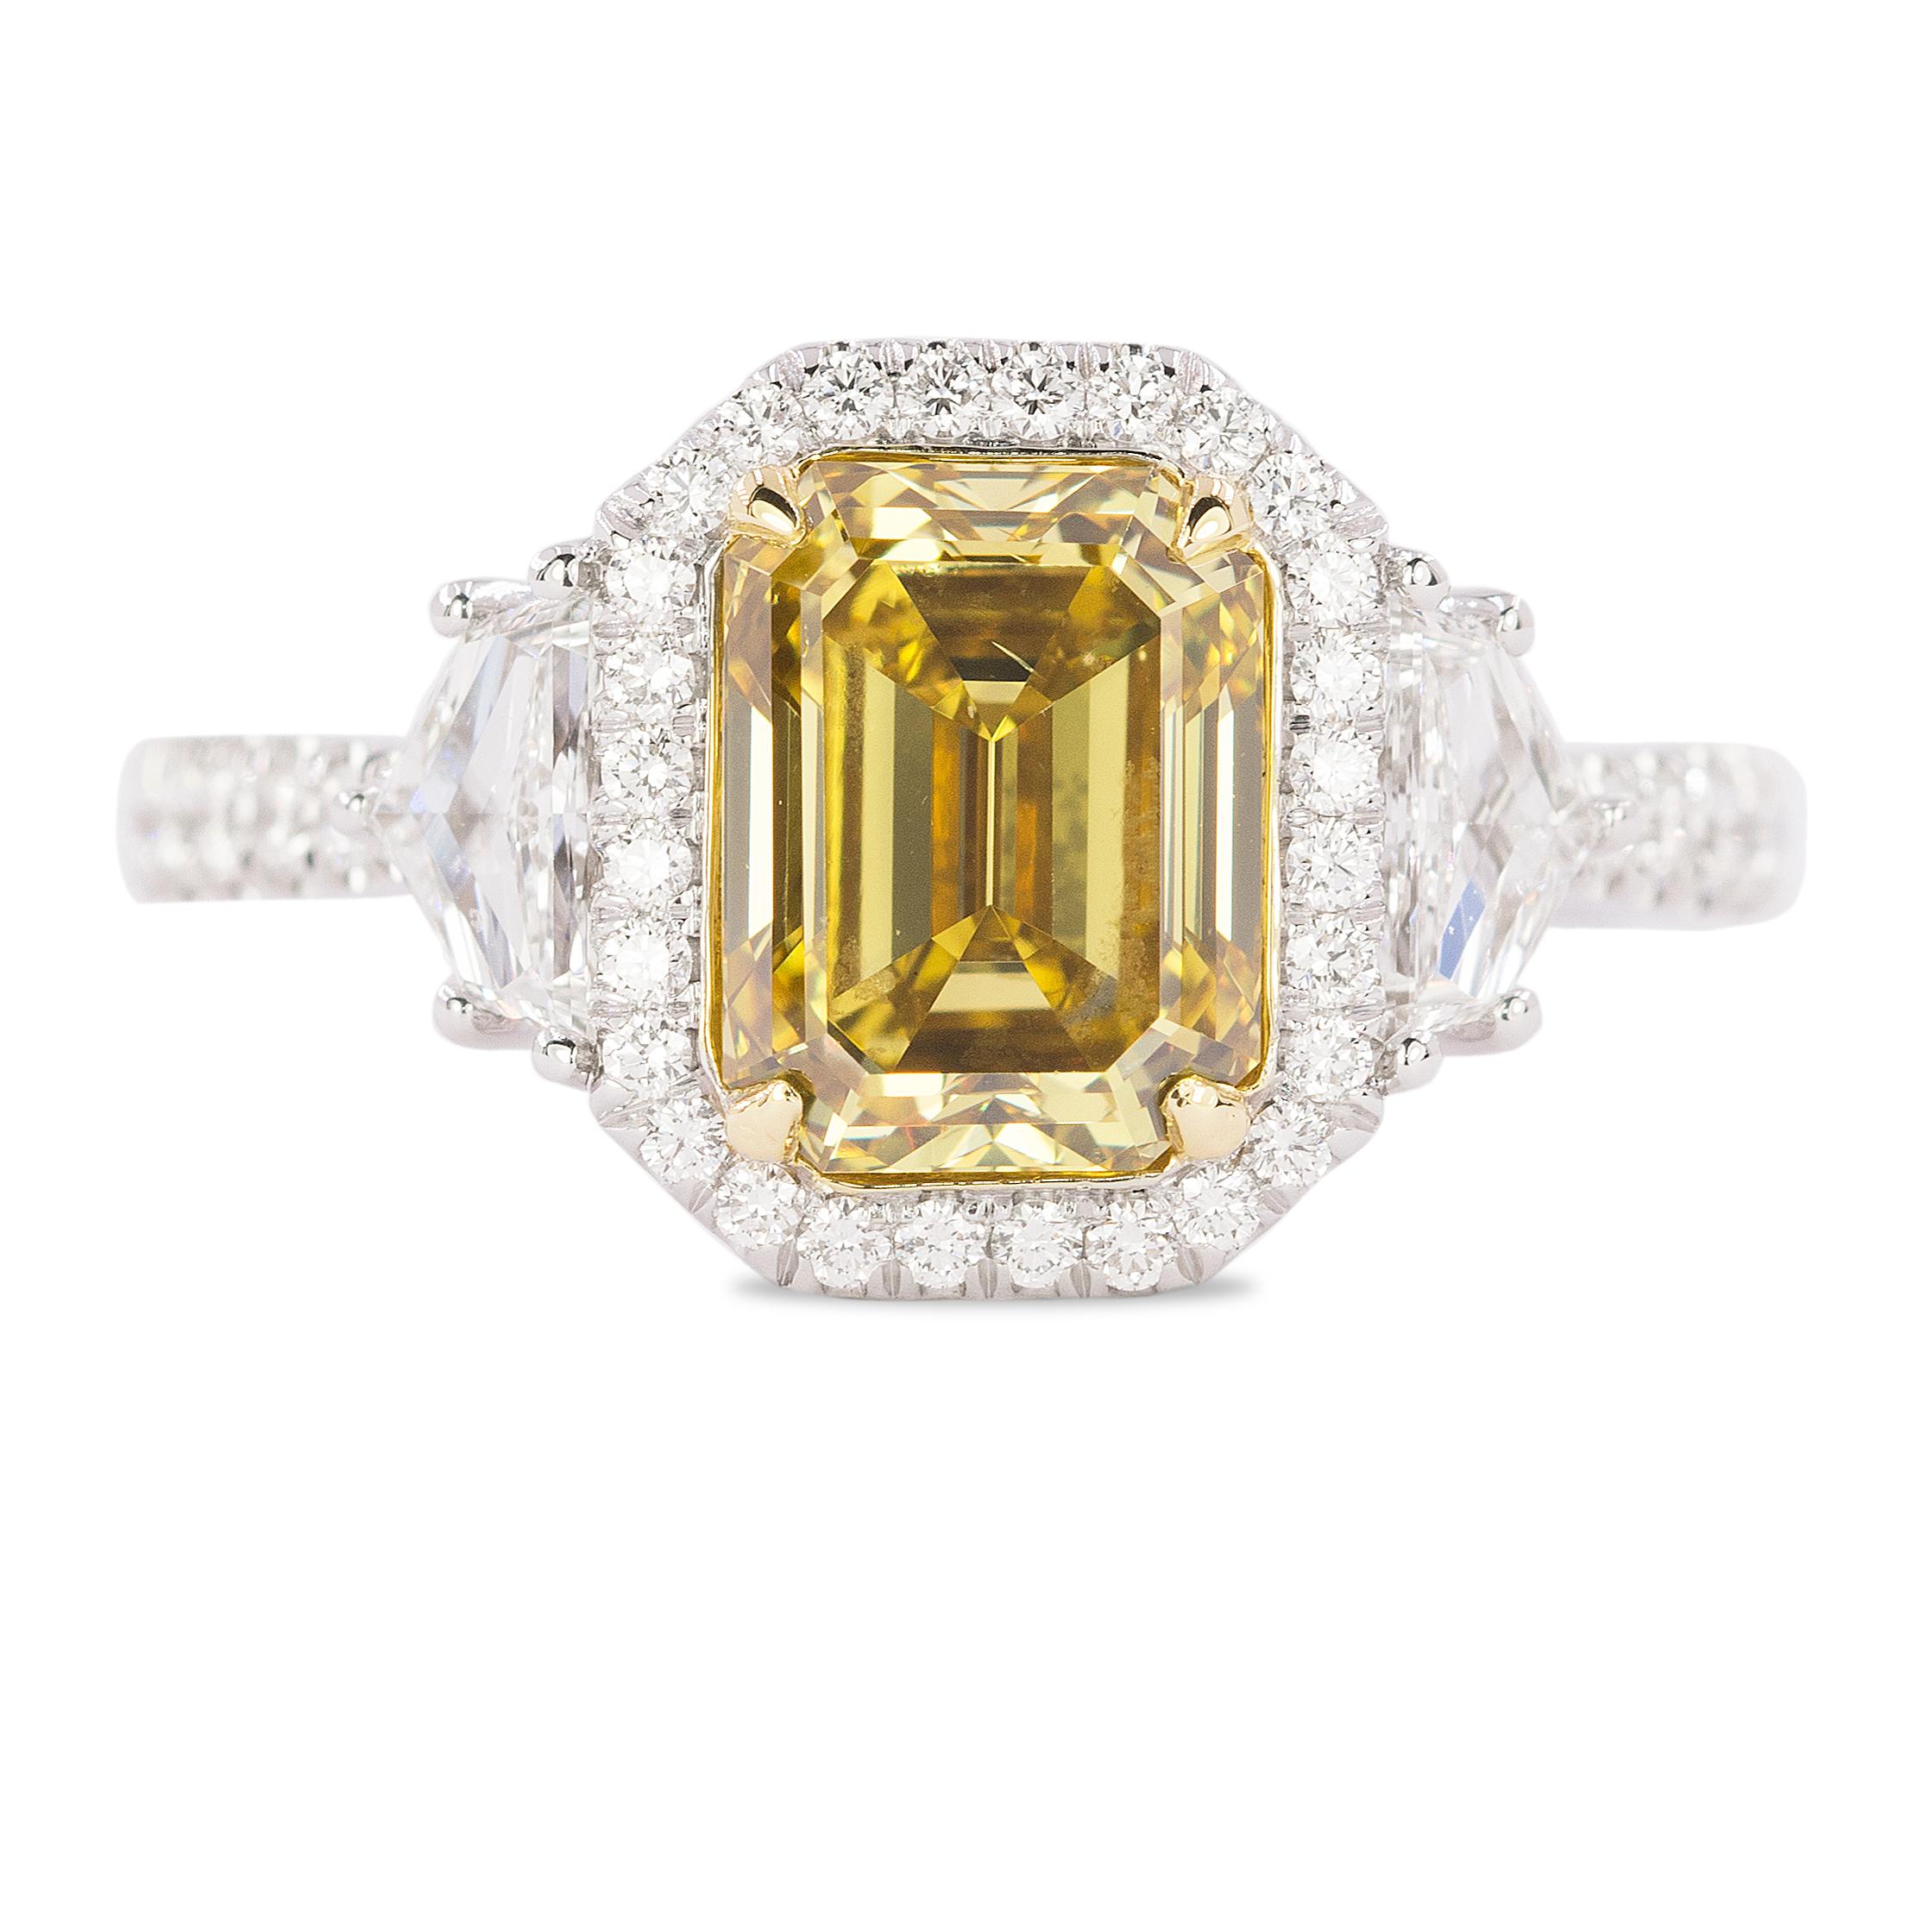 Emerald Cut 18 Karat 2.26 Carat Fancy Deep Yellow Diamond Ring